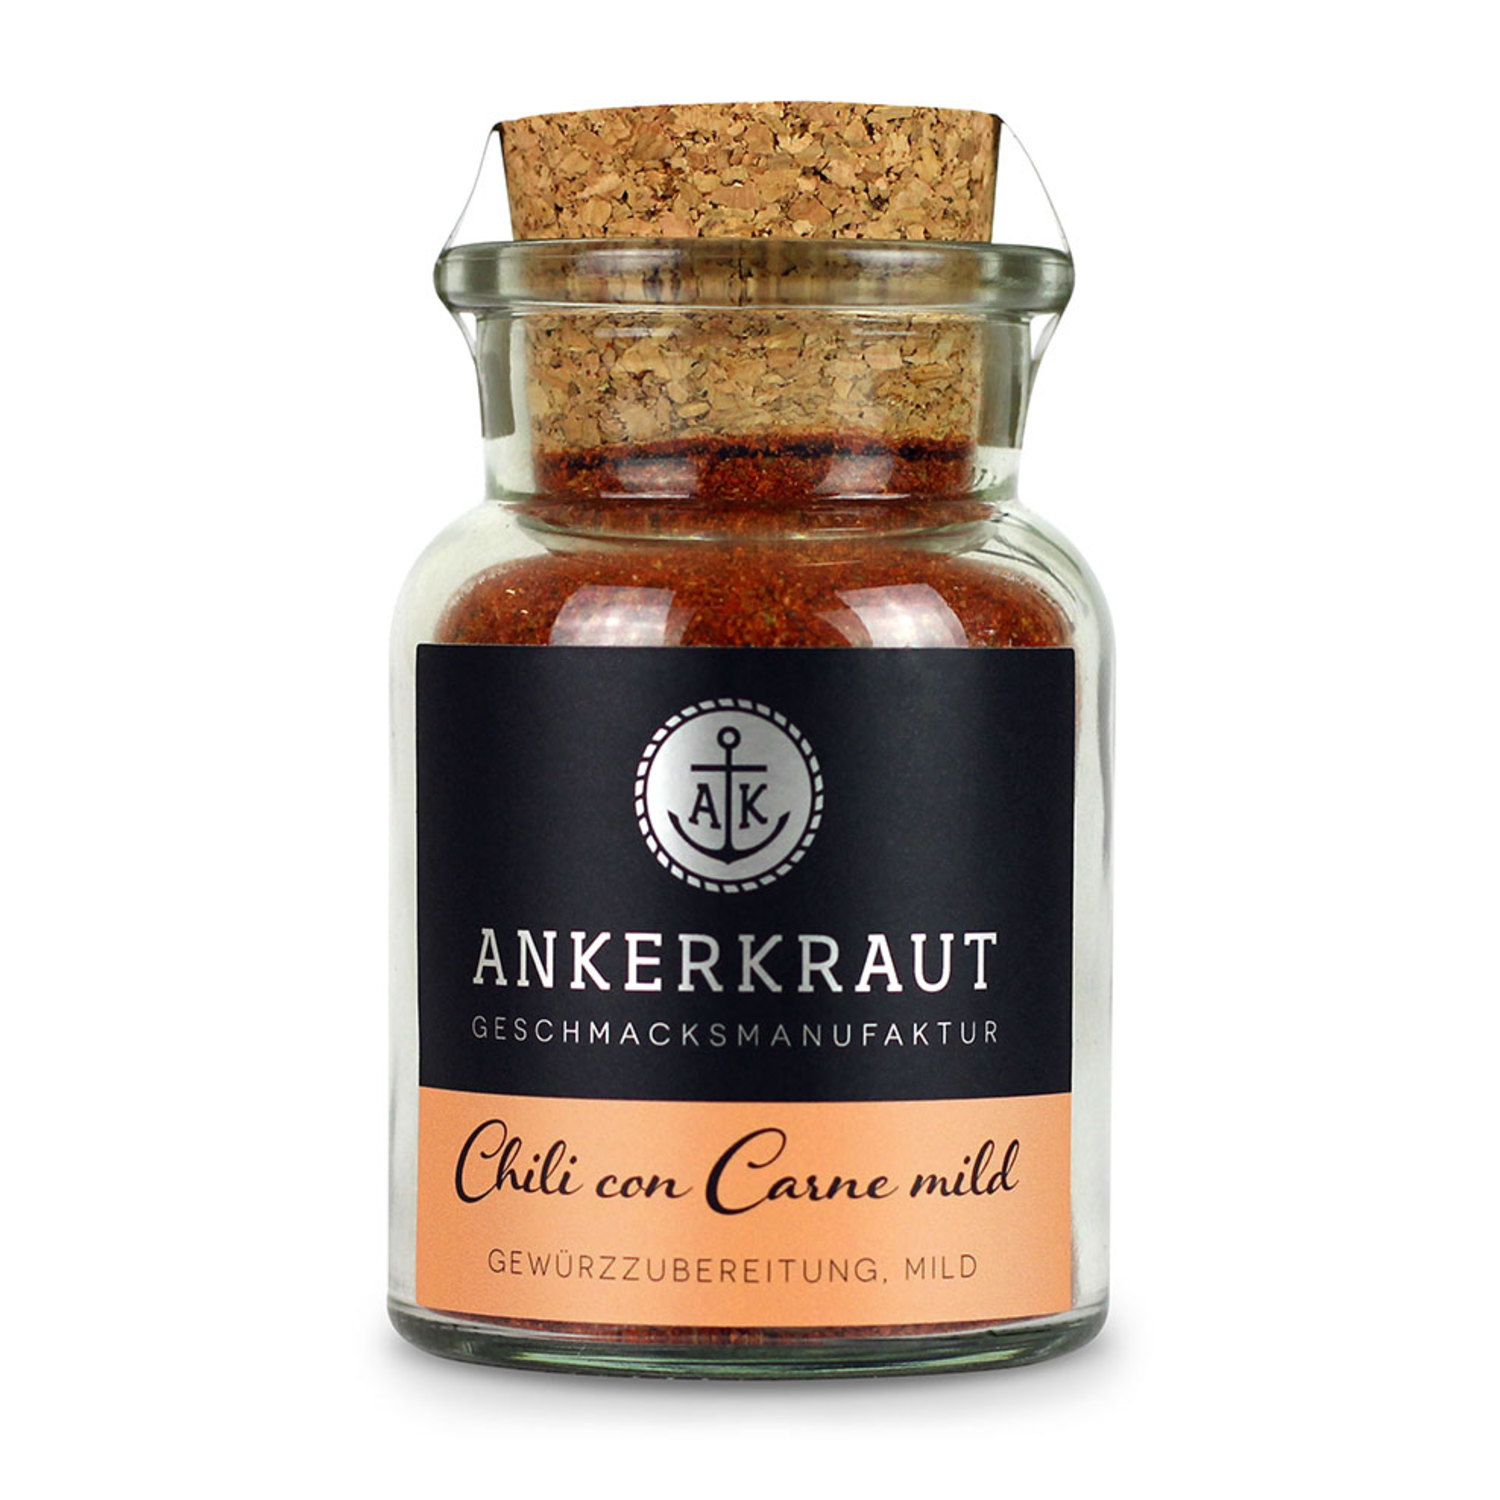 Buy your Ankerkraut chili con carne mild online